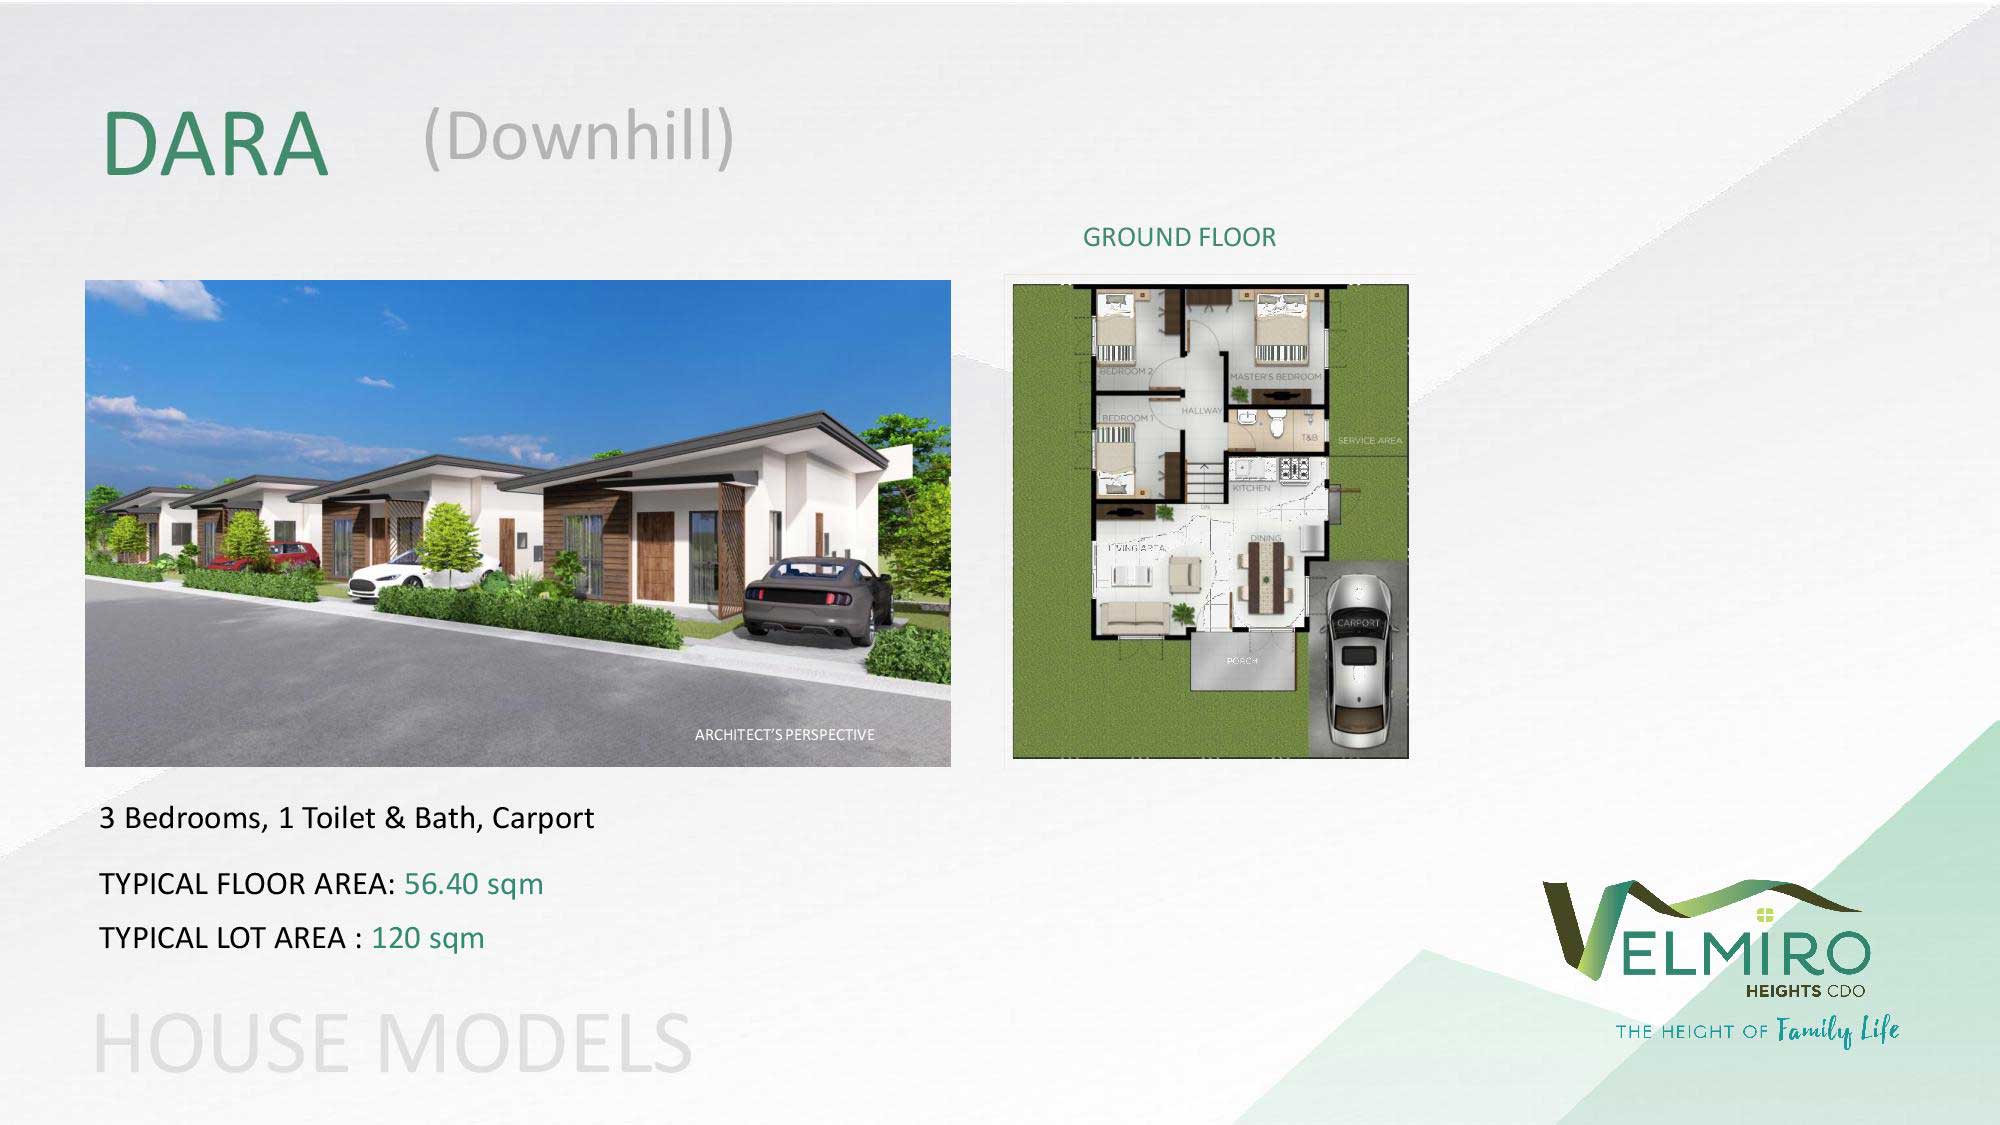 Velmiro Heights Agusan House Model Dara Downhill web GMC